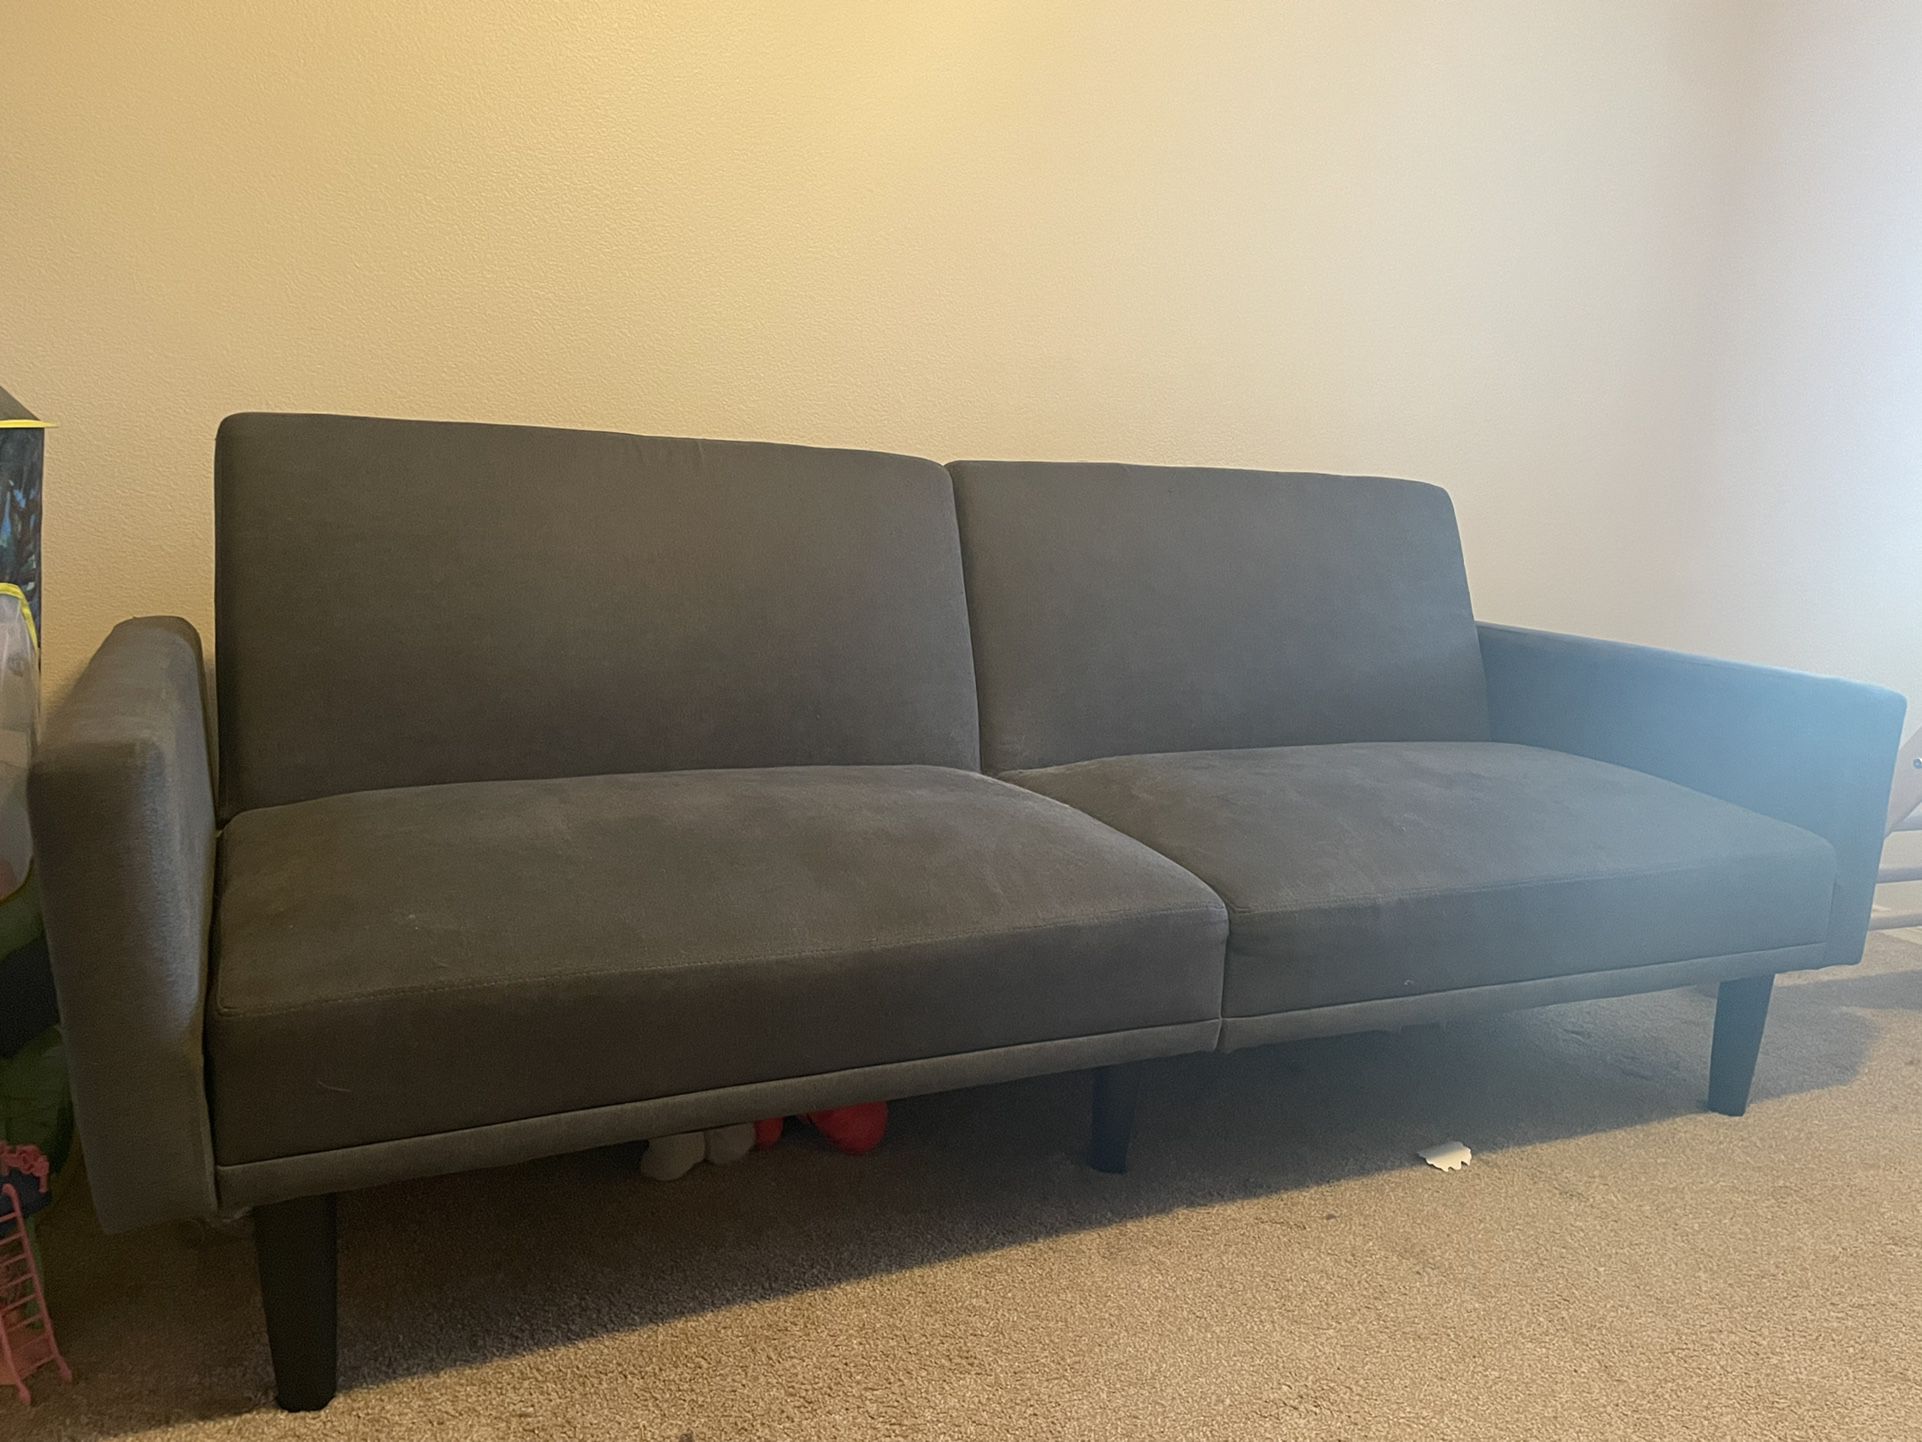 Blue Futon Sofa $100